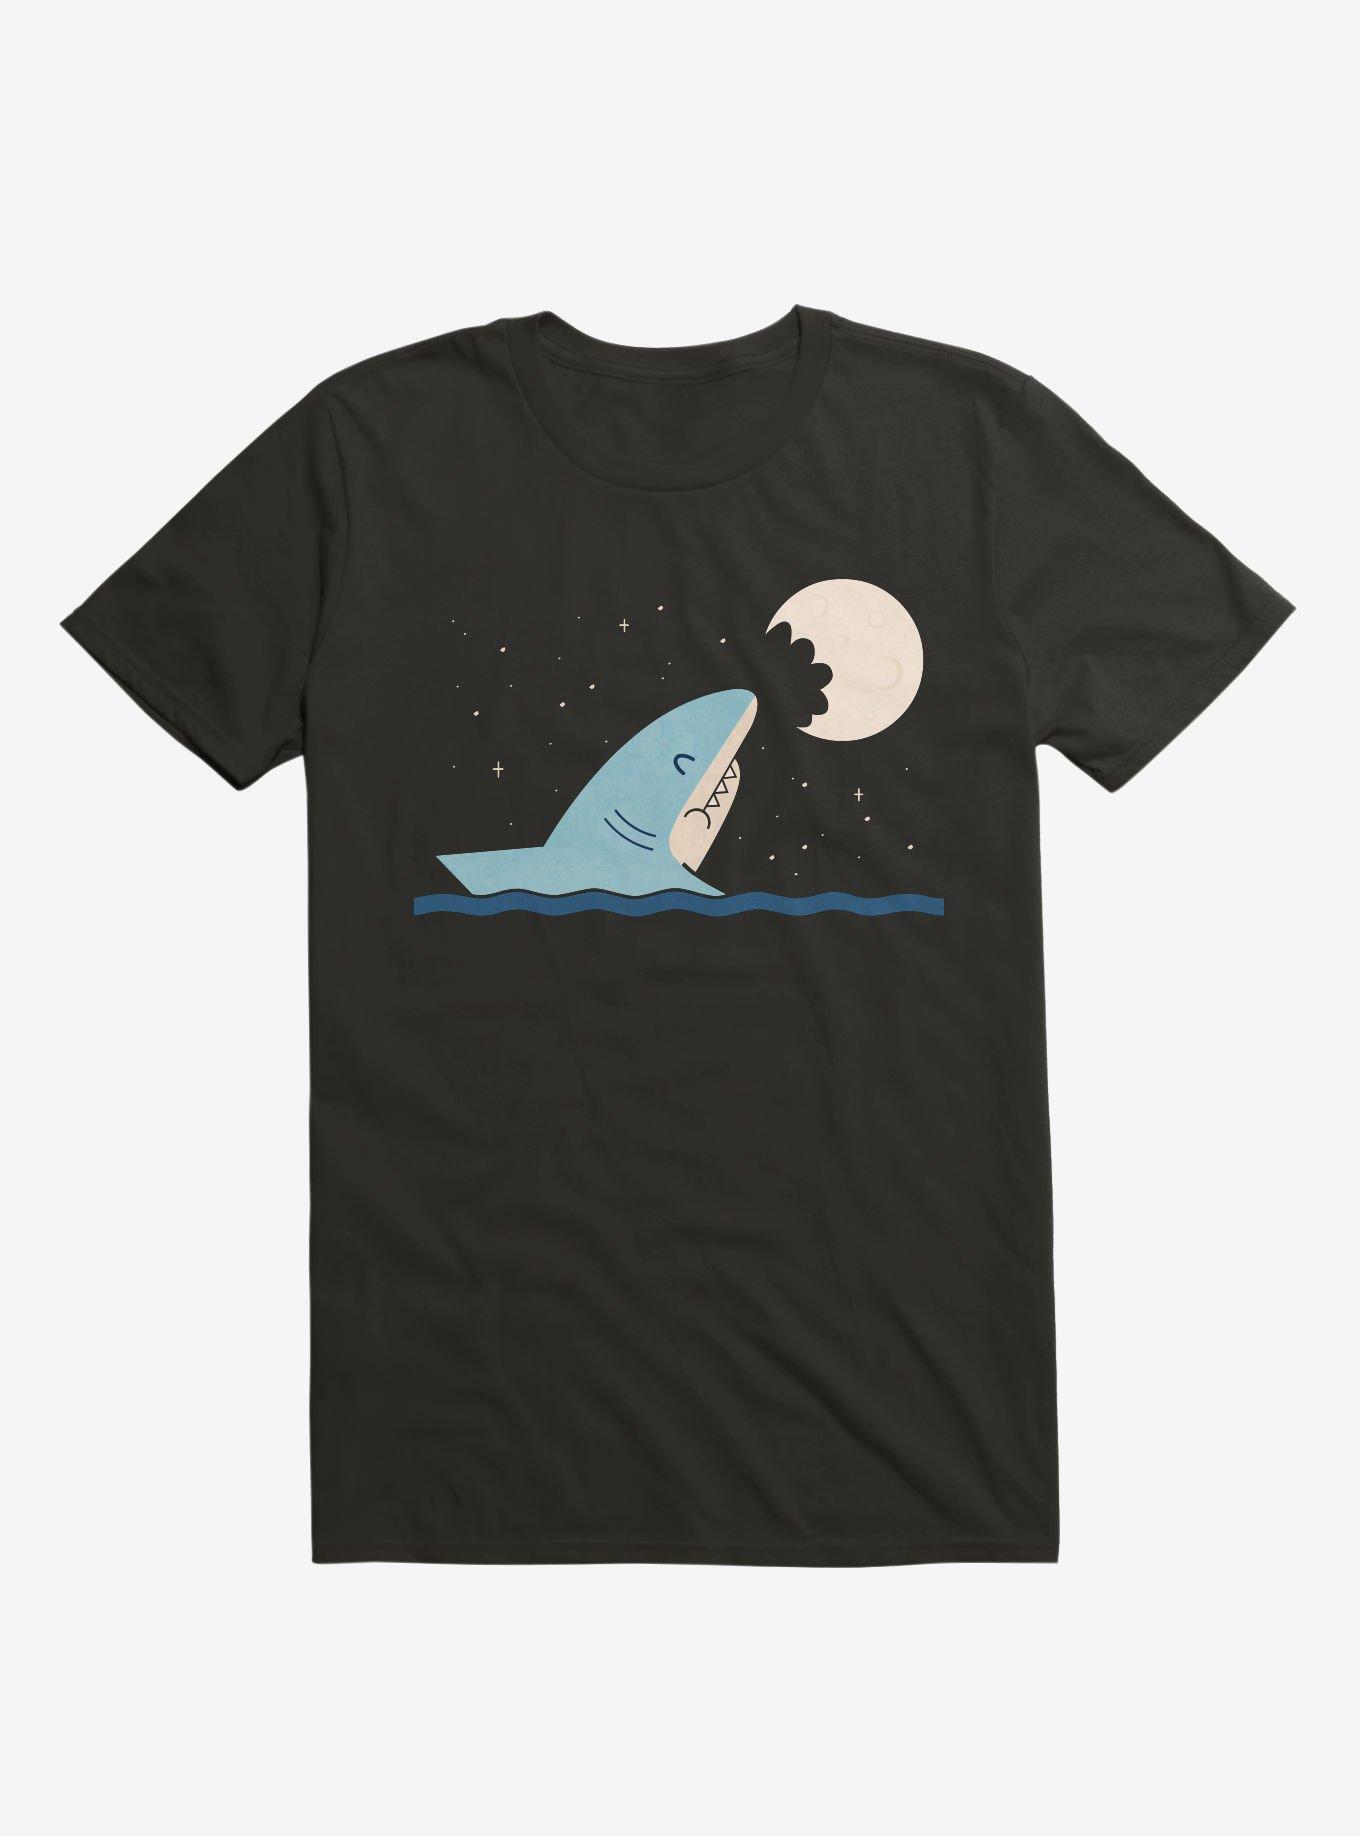 Shark Moon Bite Black T-Shirt